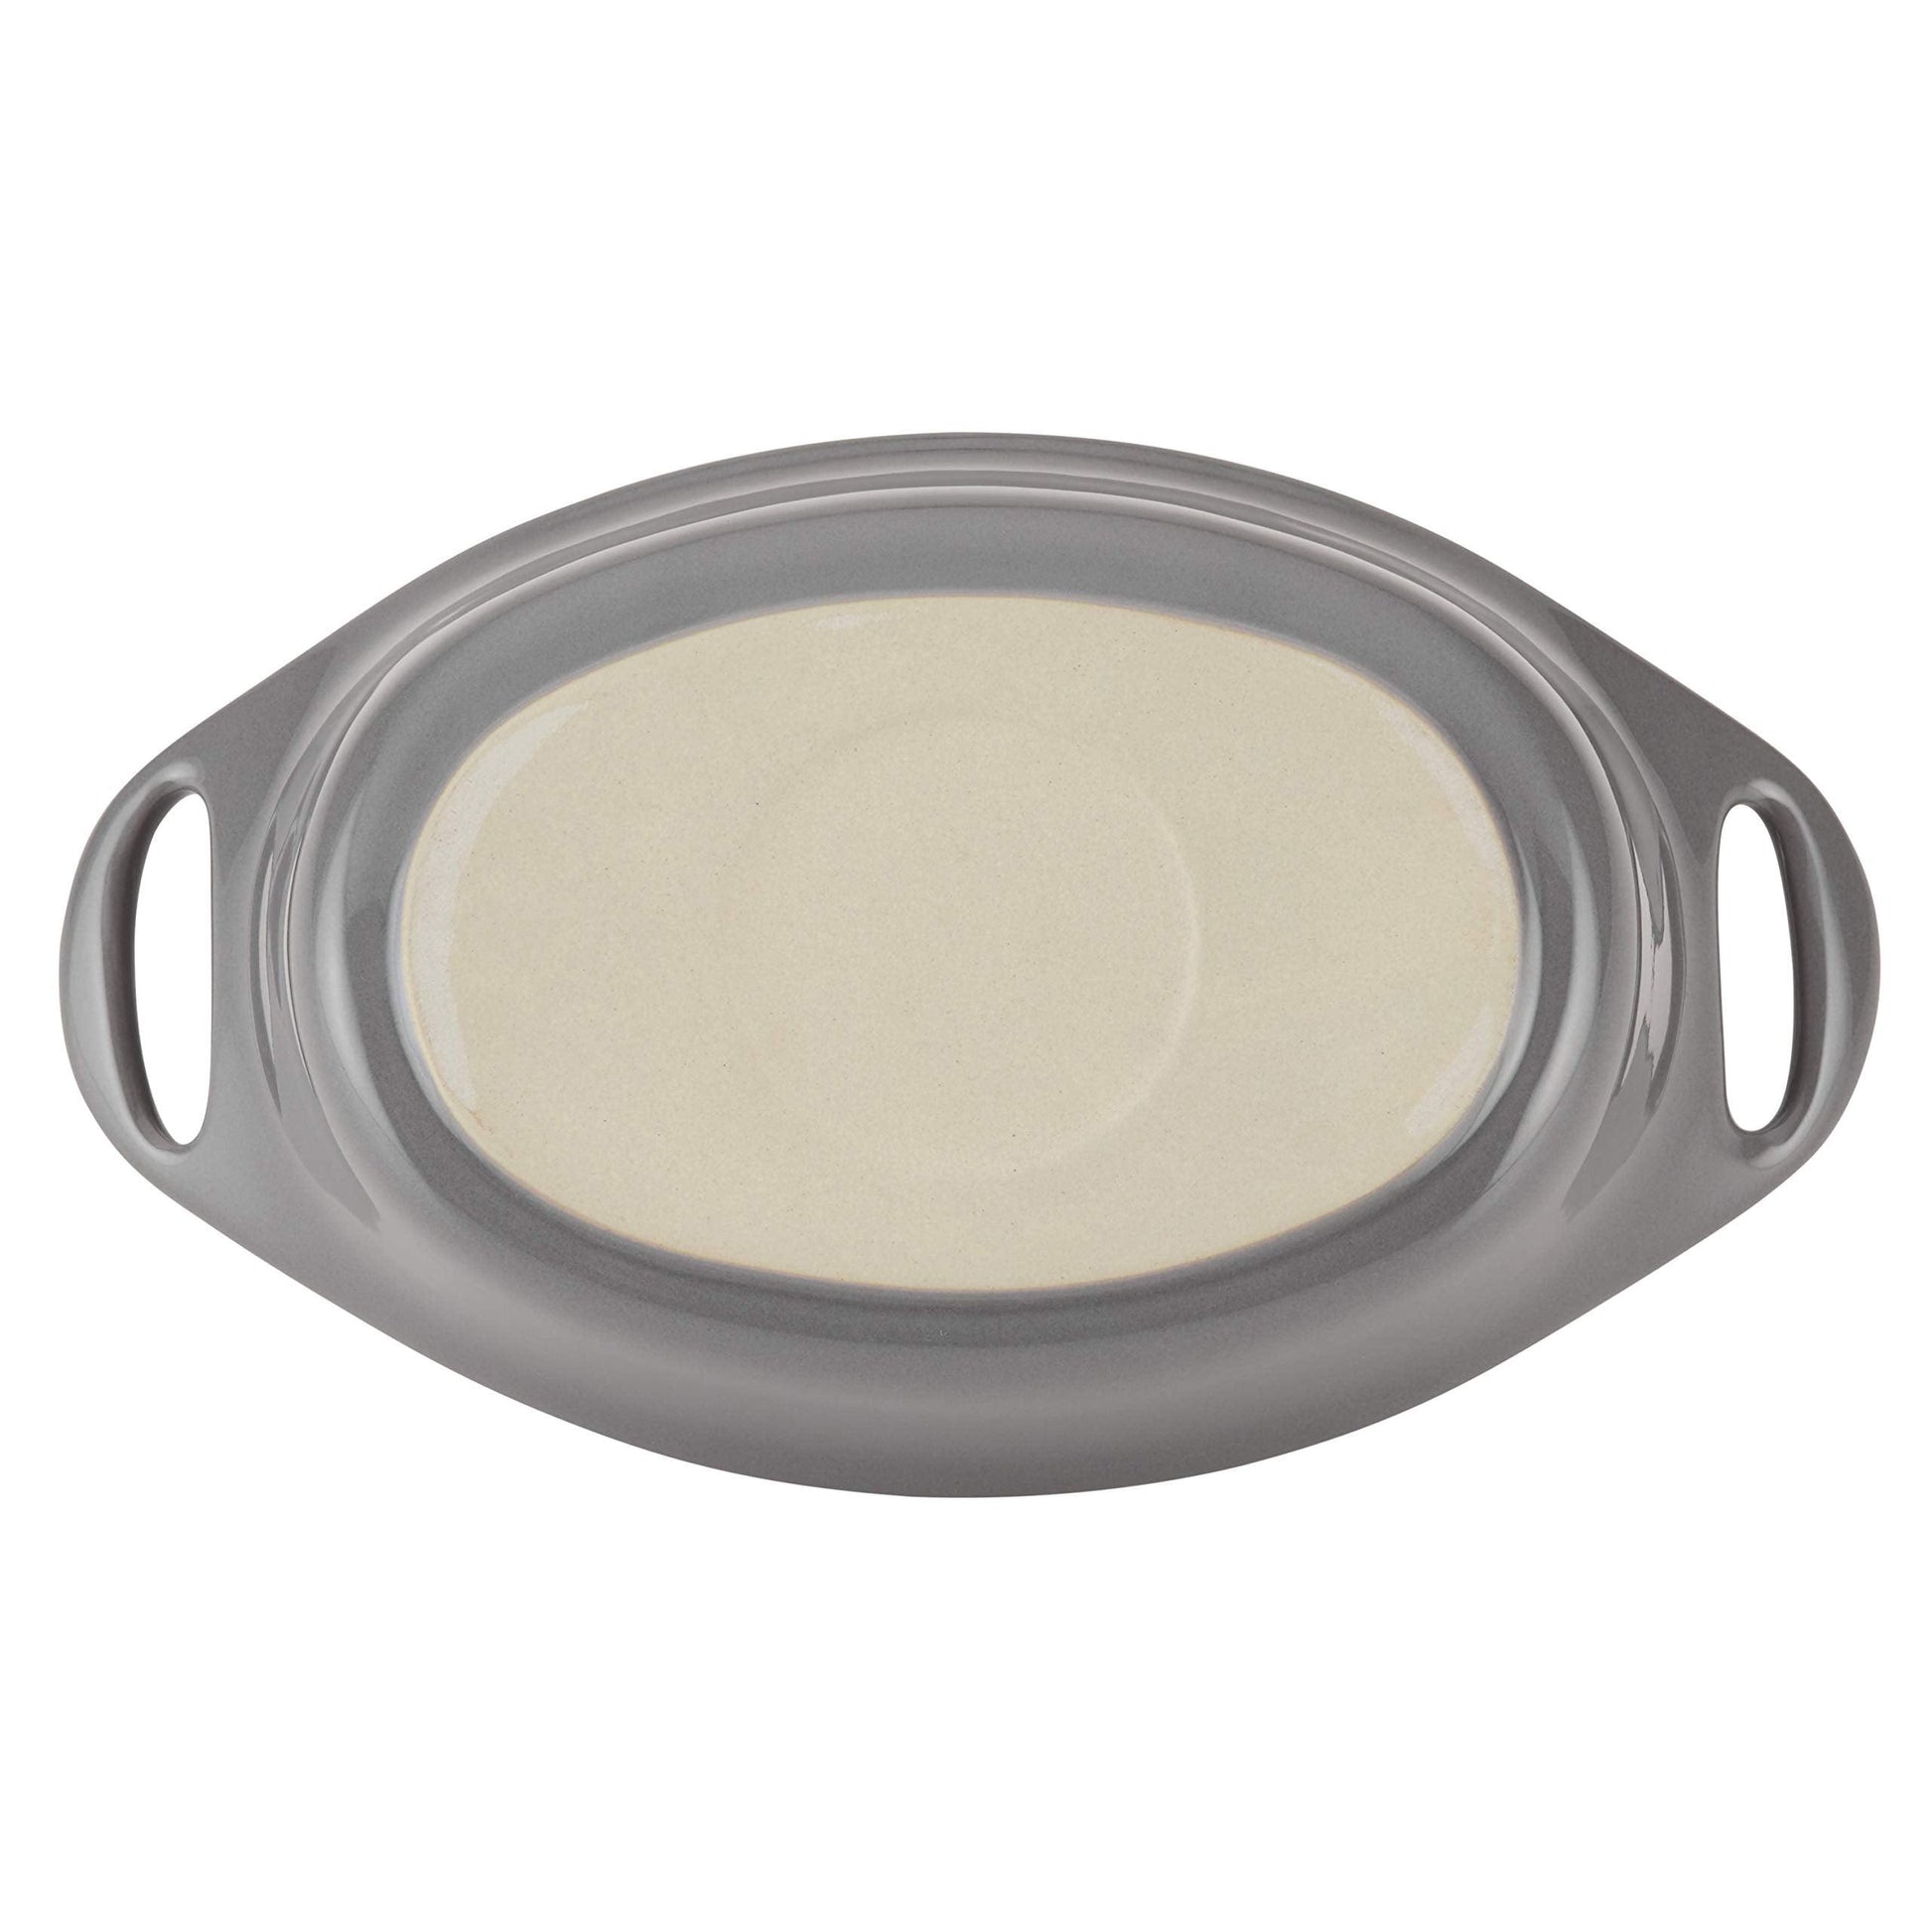 Rachael Ray Solid Glaze Ceramics Au Gratin Bakeware / Baker Set, Oval - 2 Piece, Gray - CookCave